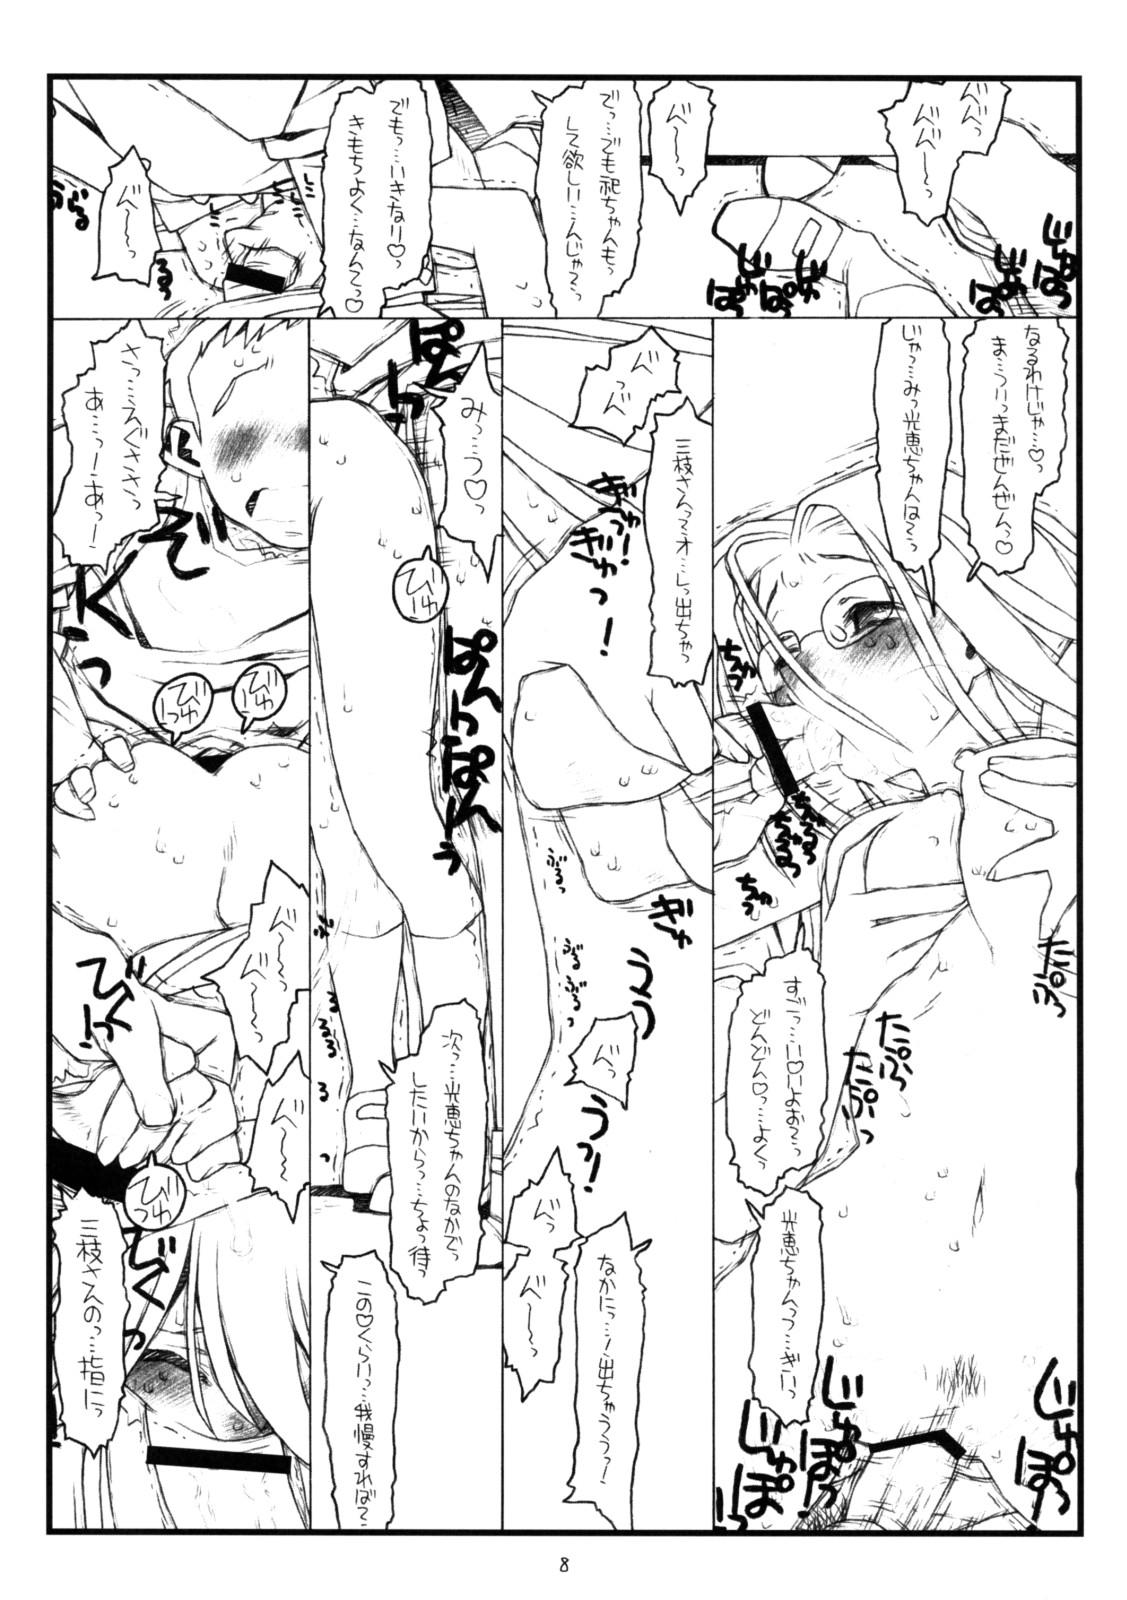 Blond Kamisama no Inai Tsuki - Kamichu Casa - Page 7